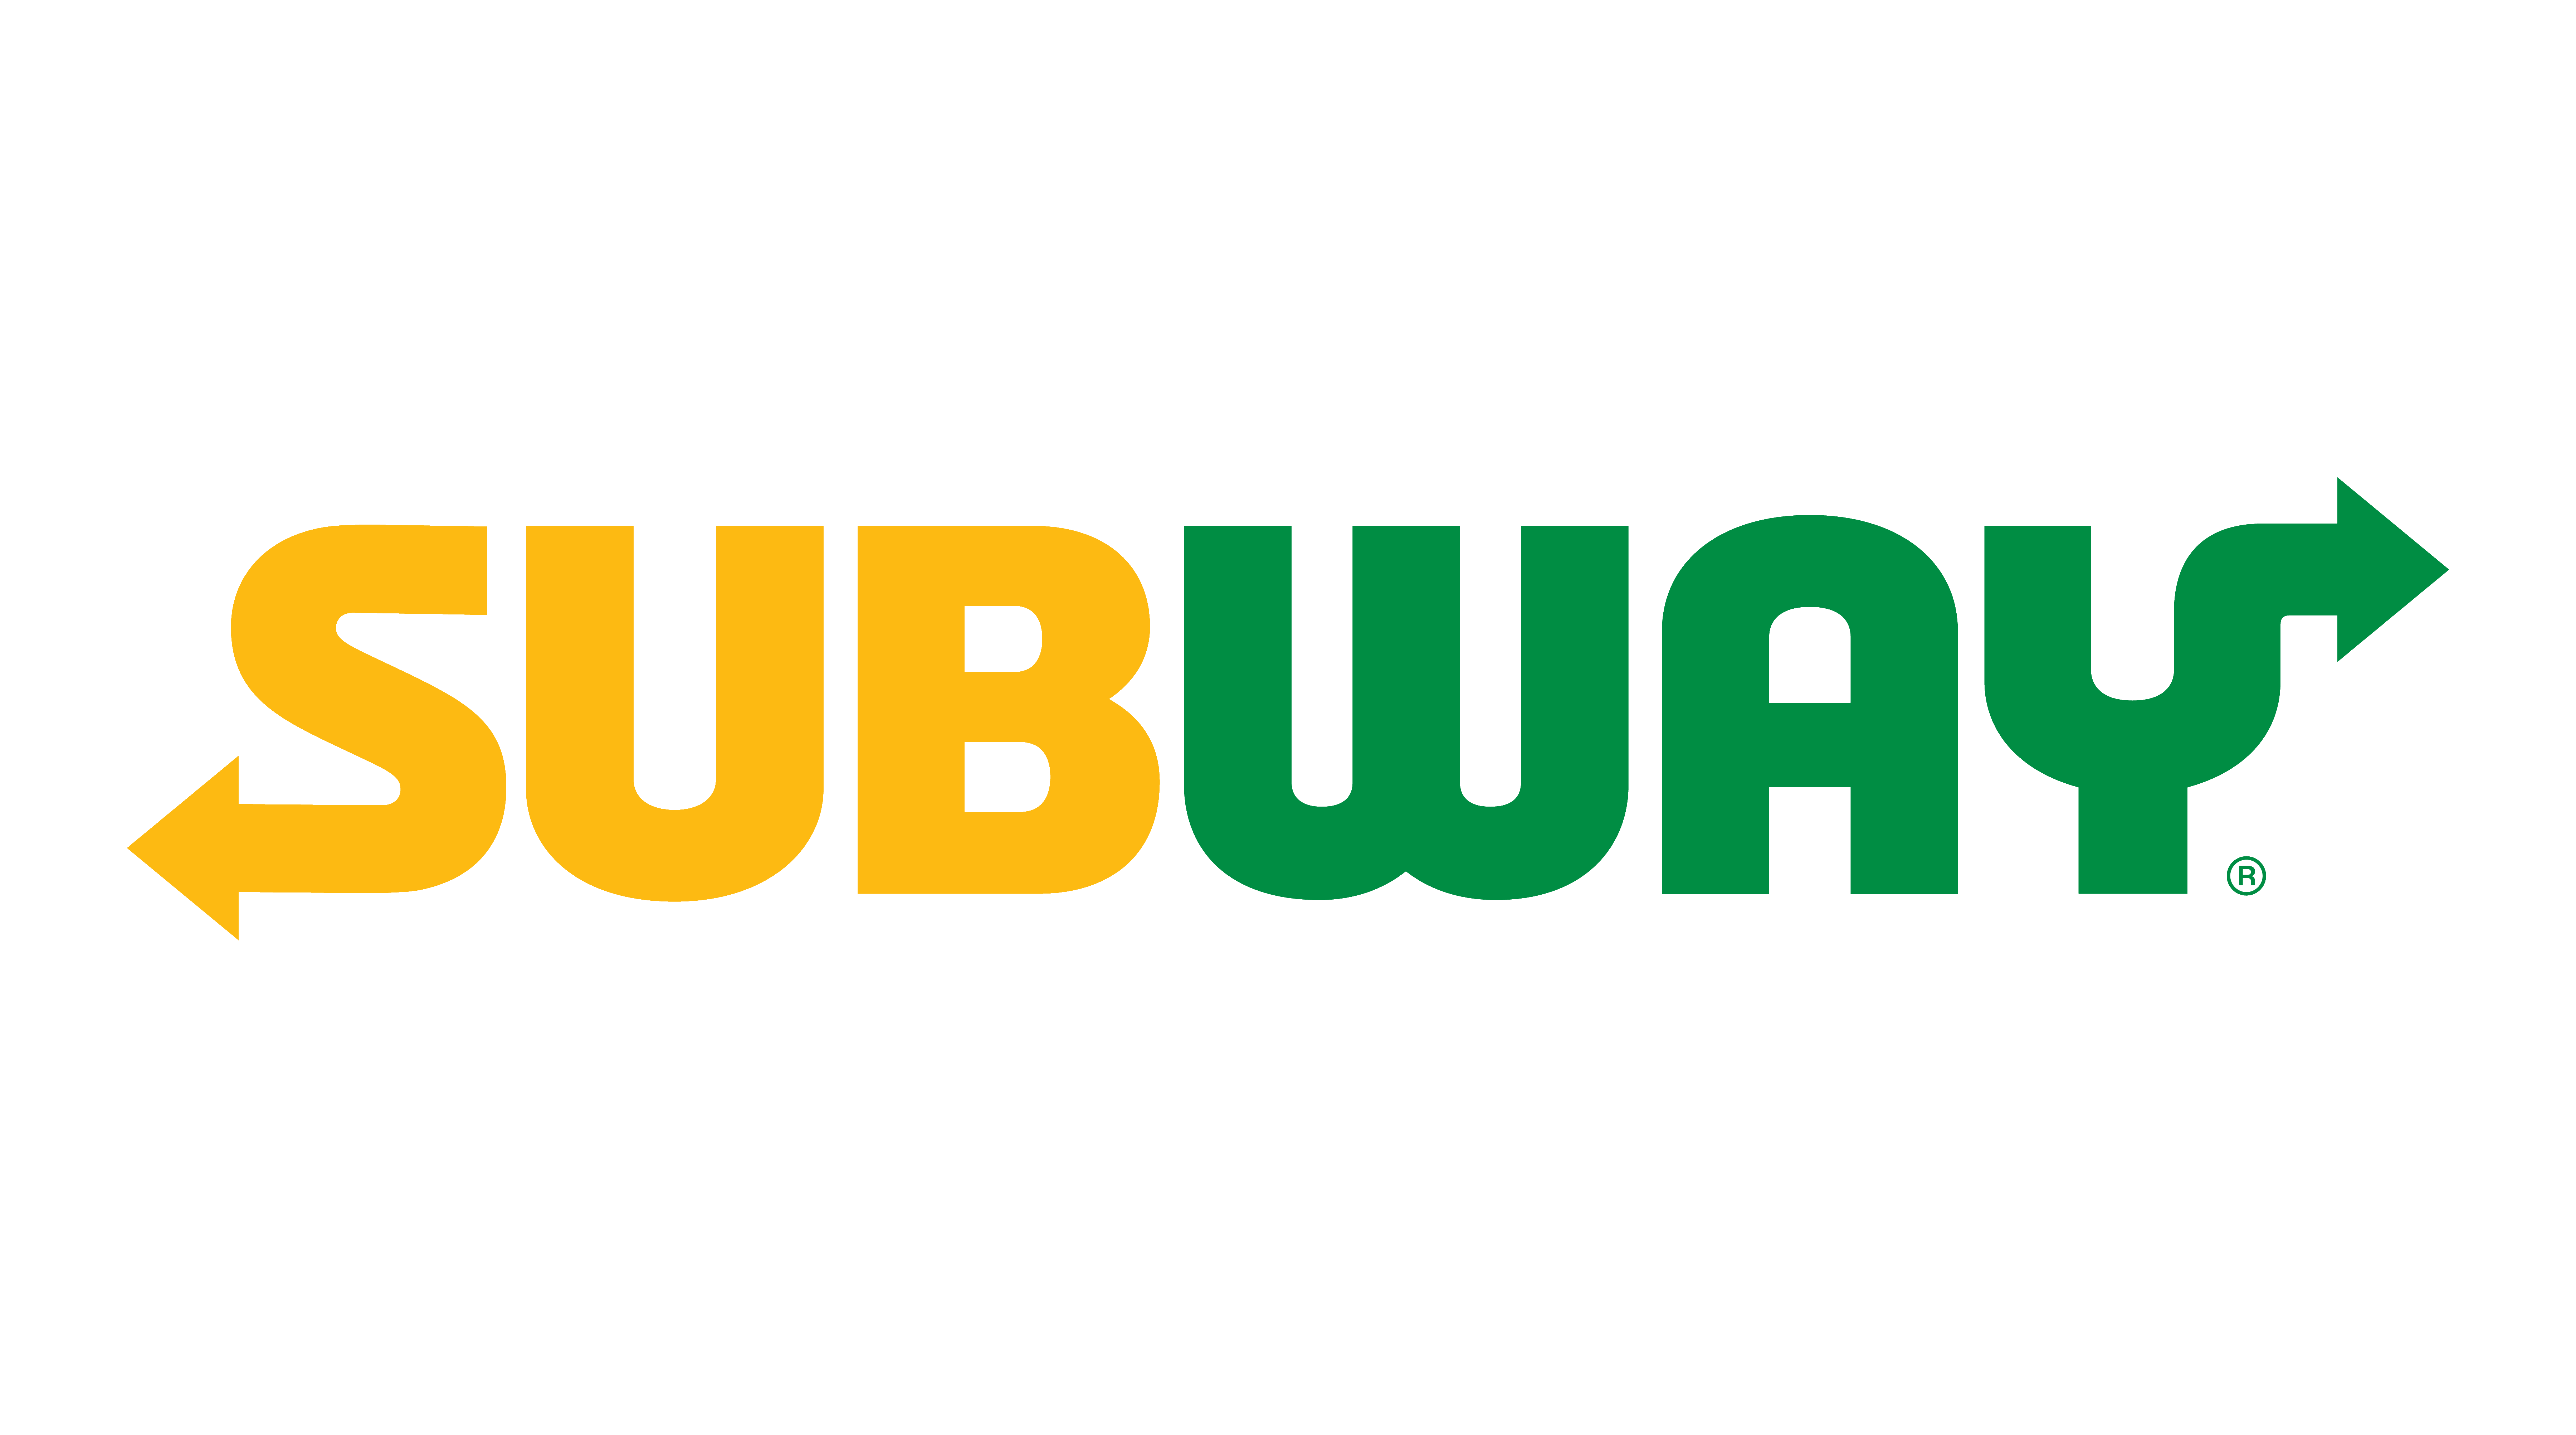 Subway food photography logo